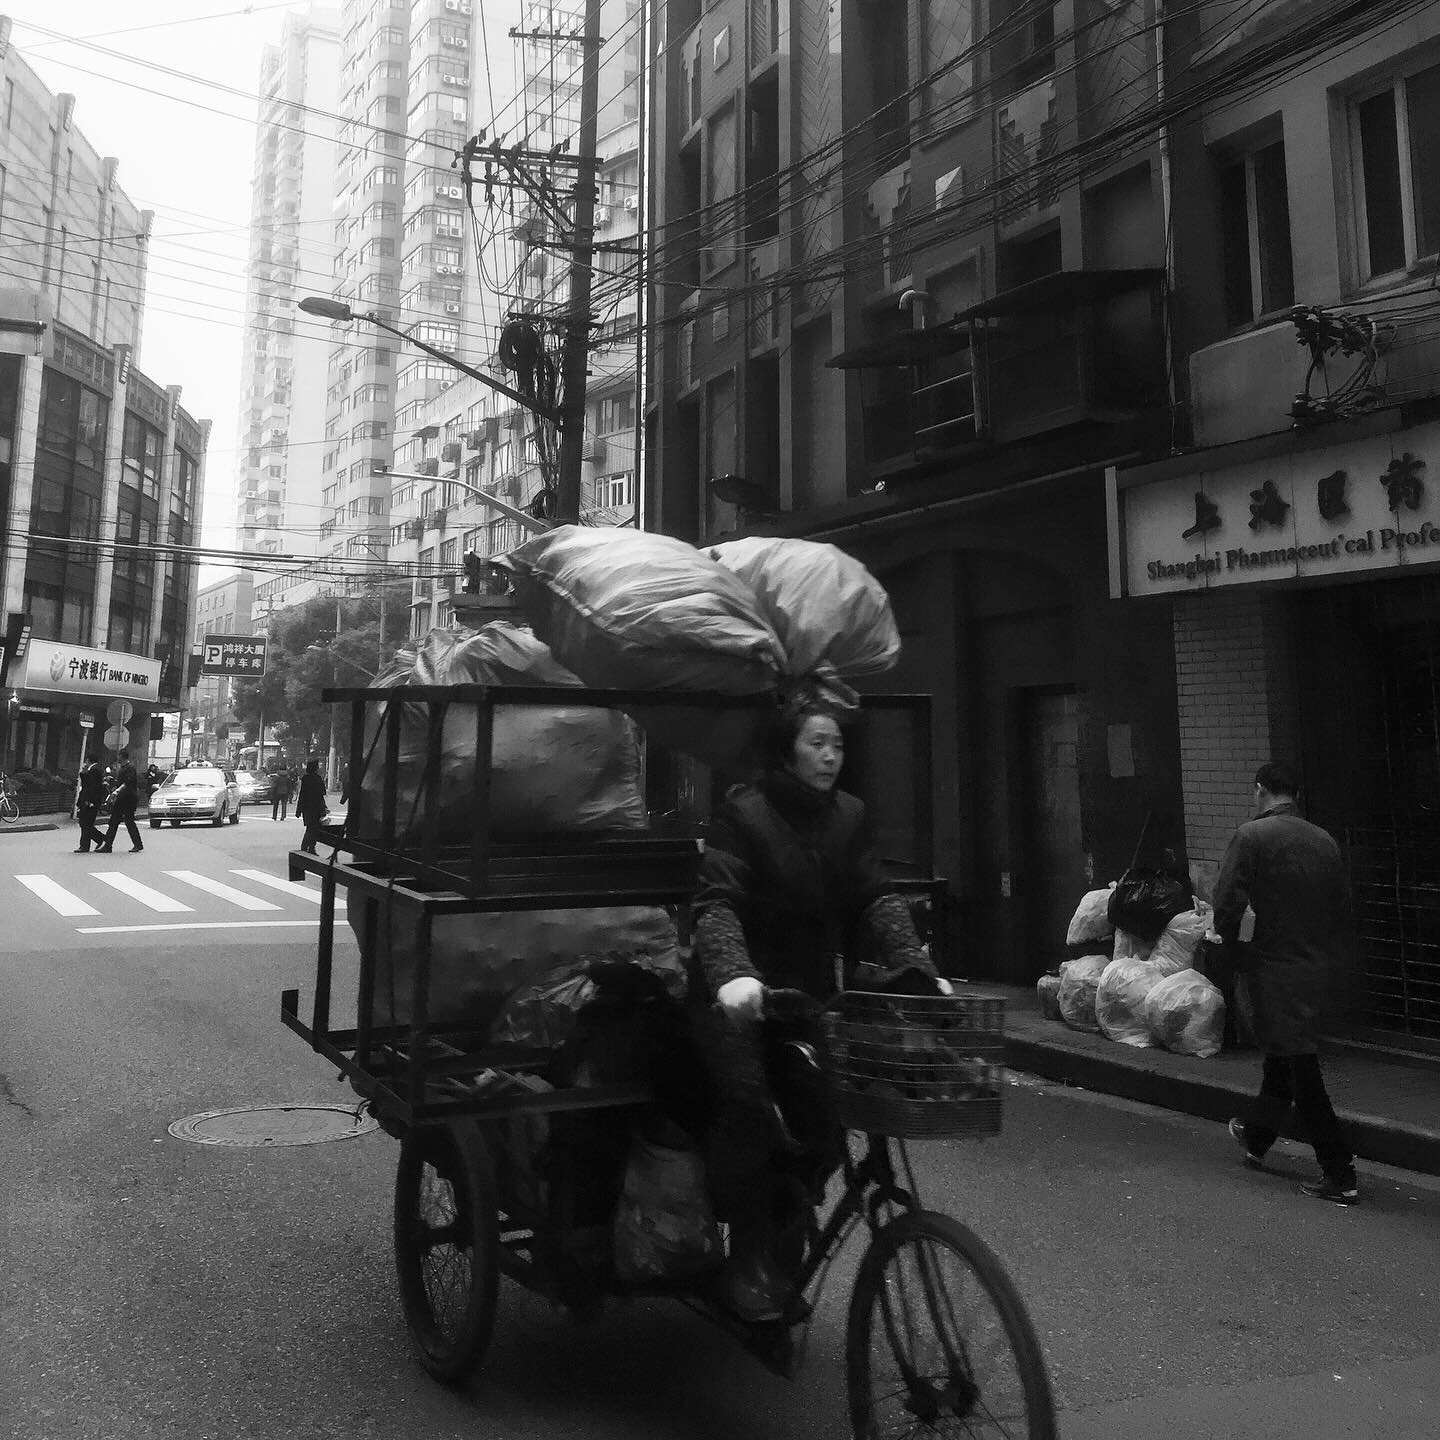 Street transport in Shanghai
#streettransport #shanghai #china